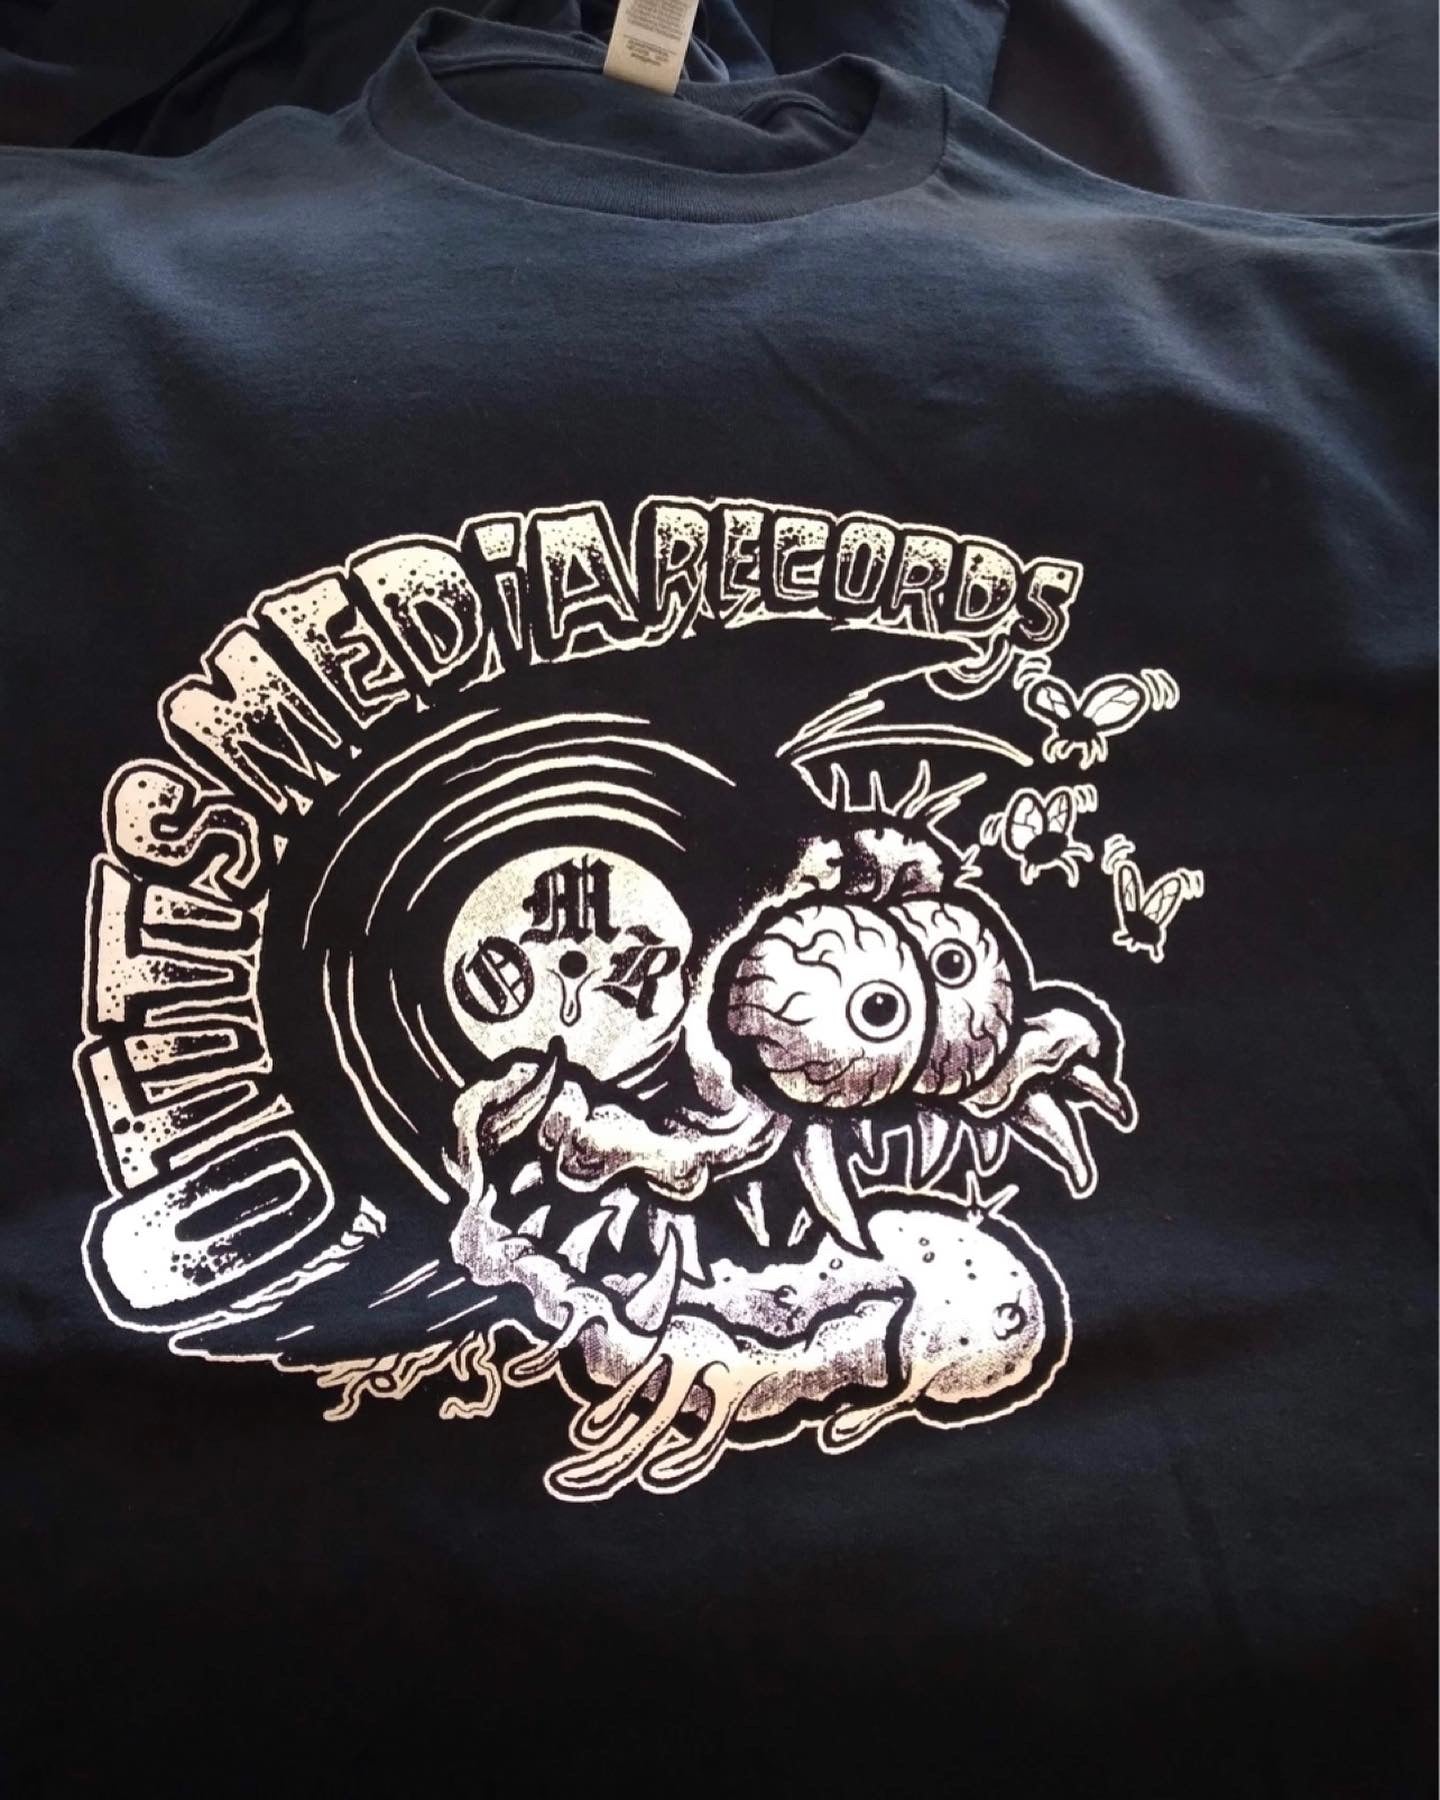 OMRMCH-009 “Hurricane Head Fink Guy” T-Shirt!